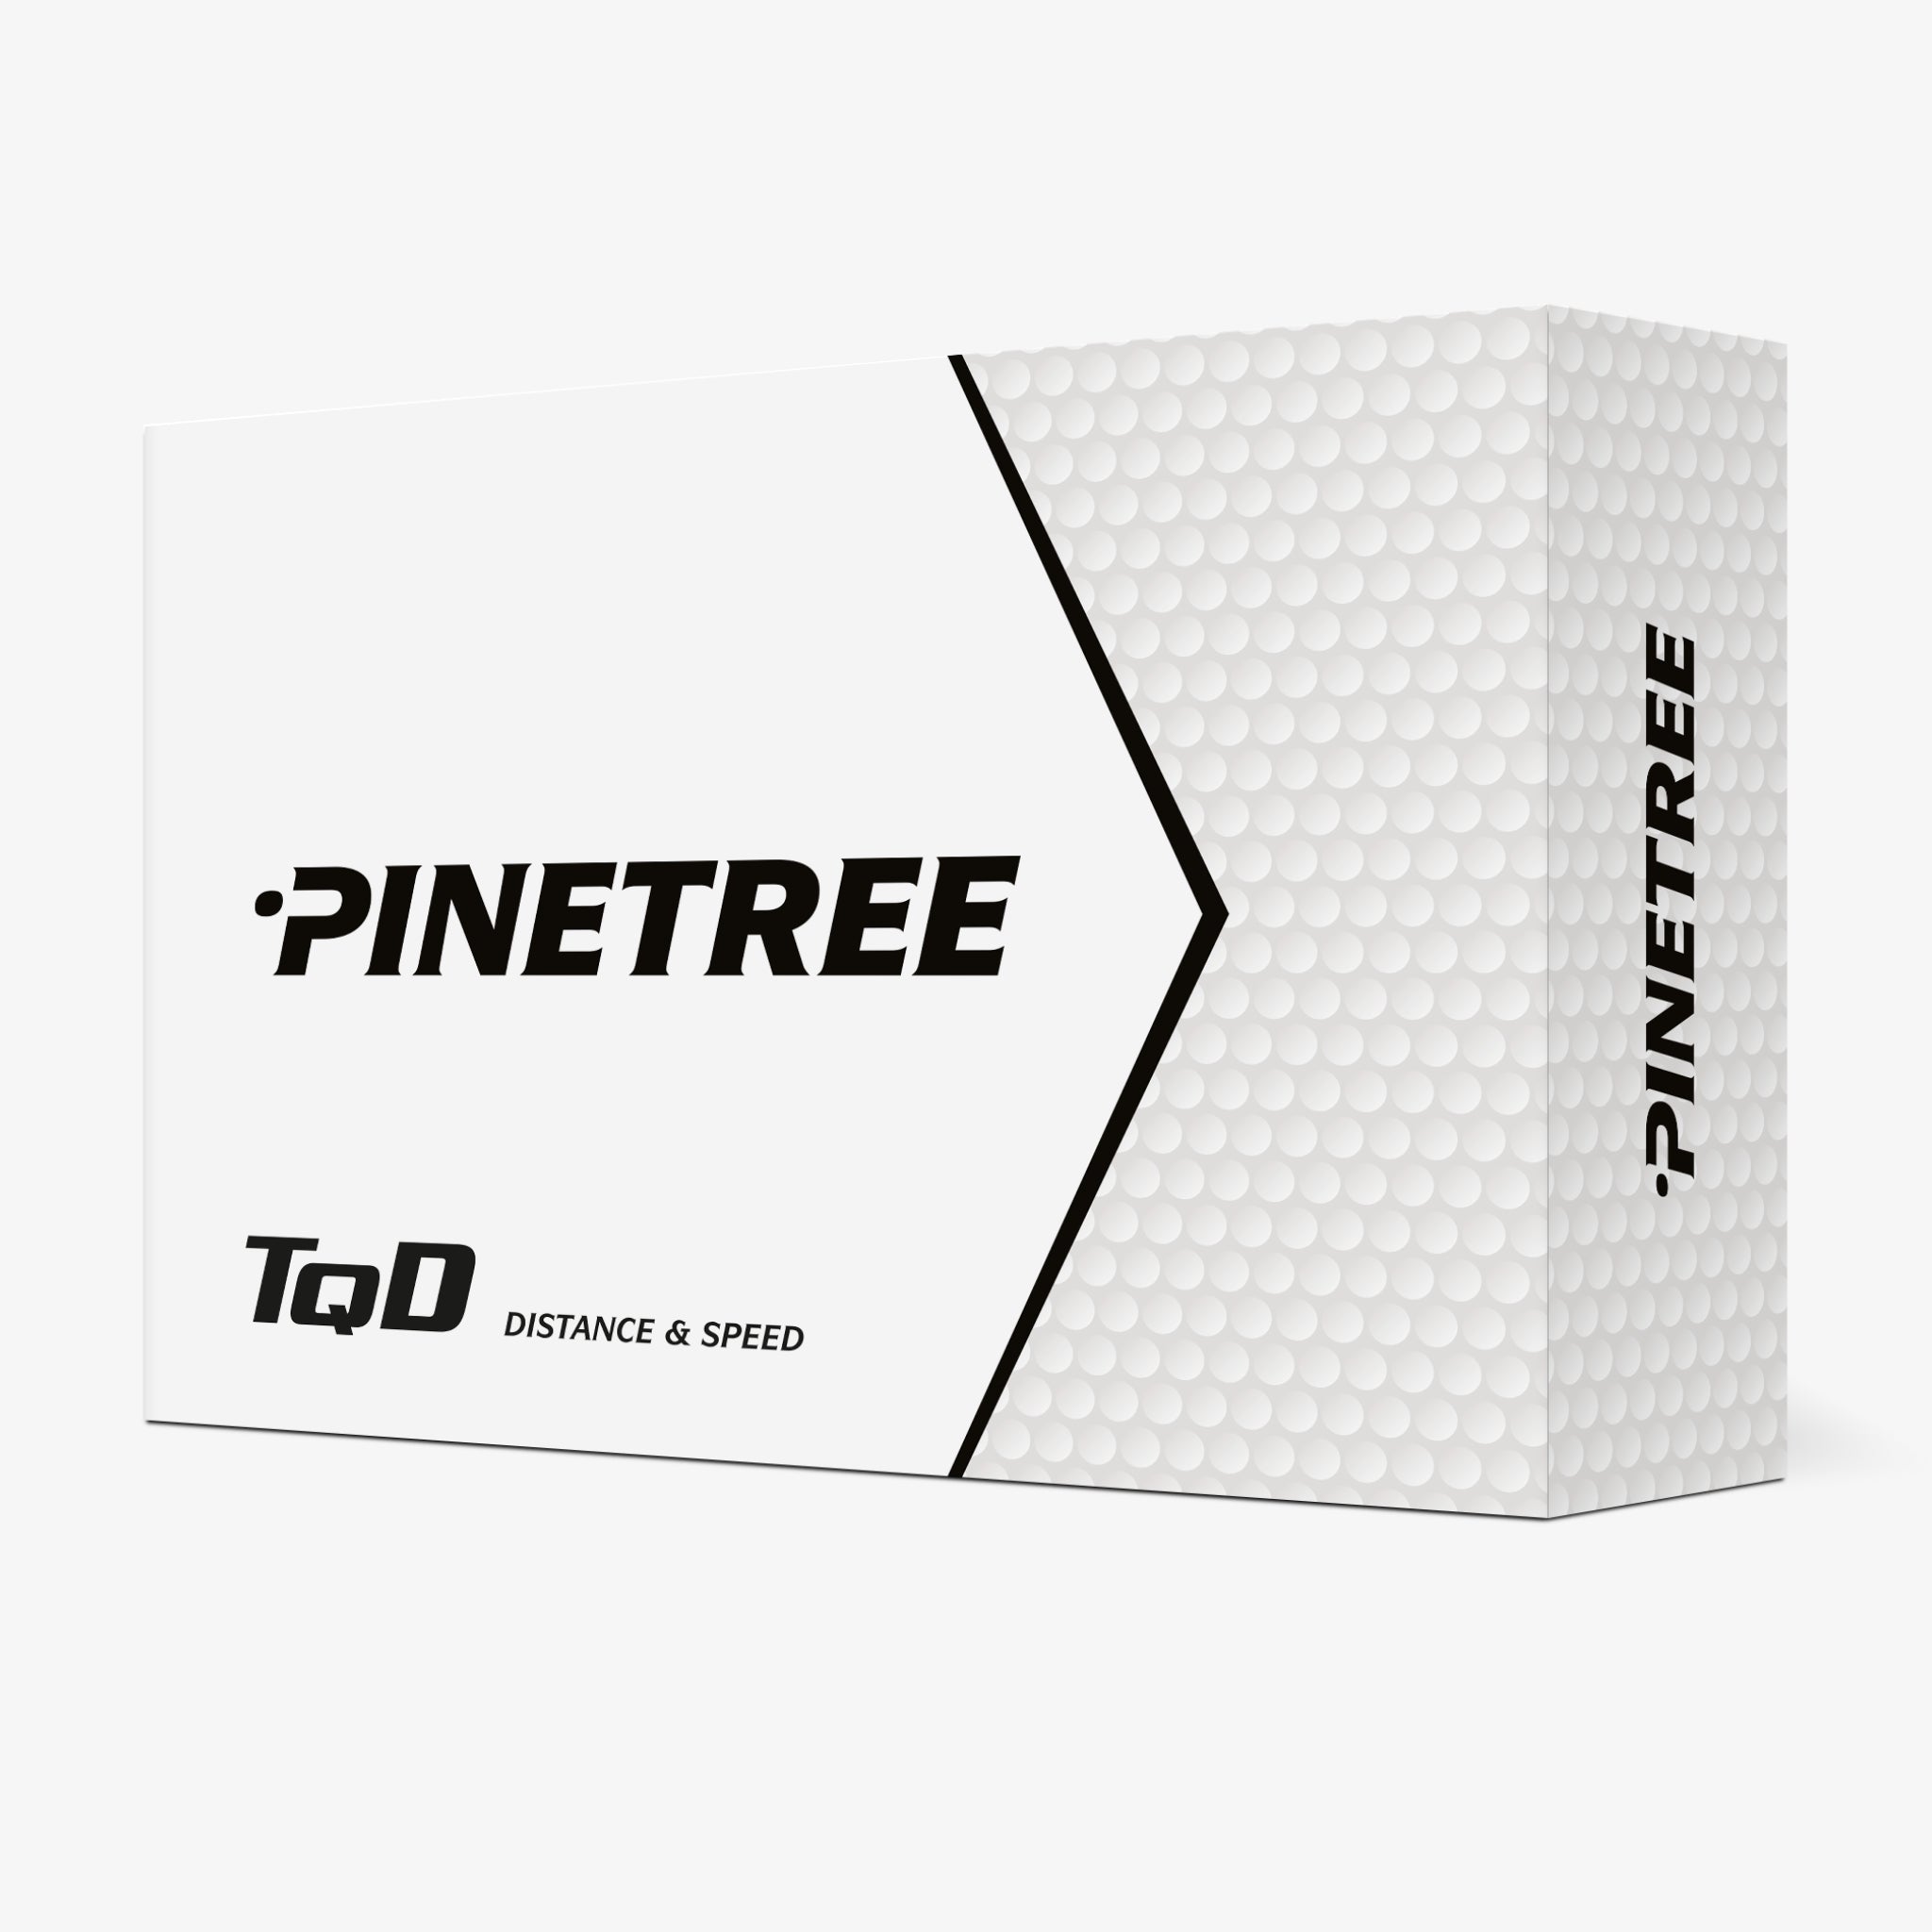 3 x Pinetree TQD + tour handske